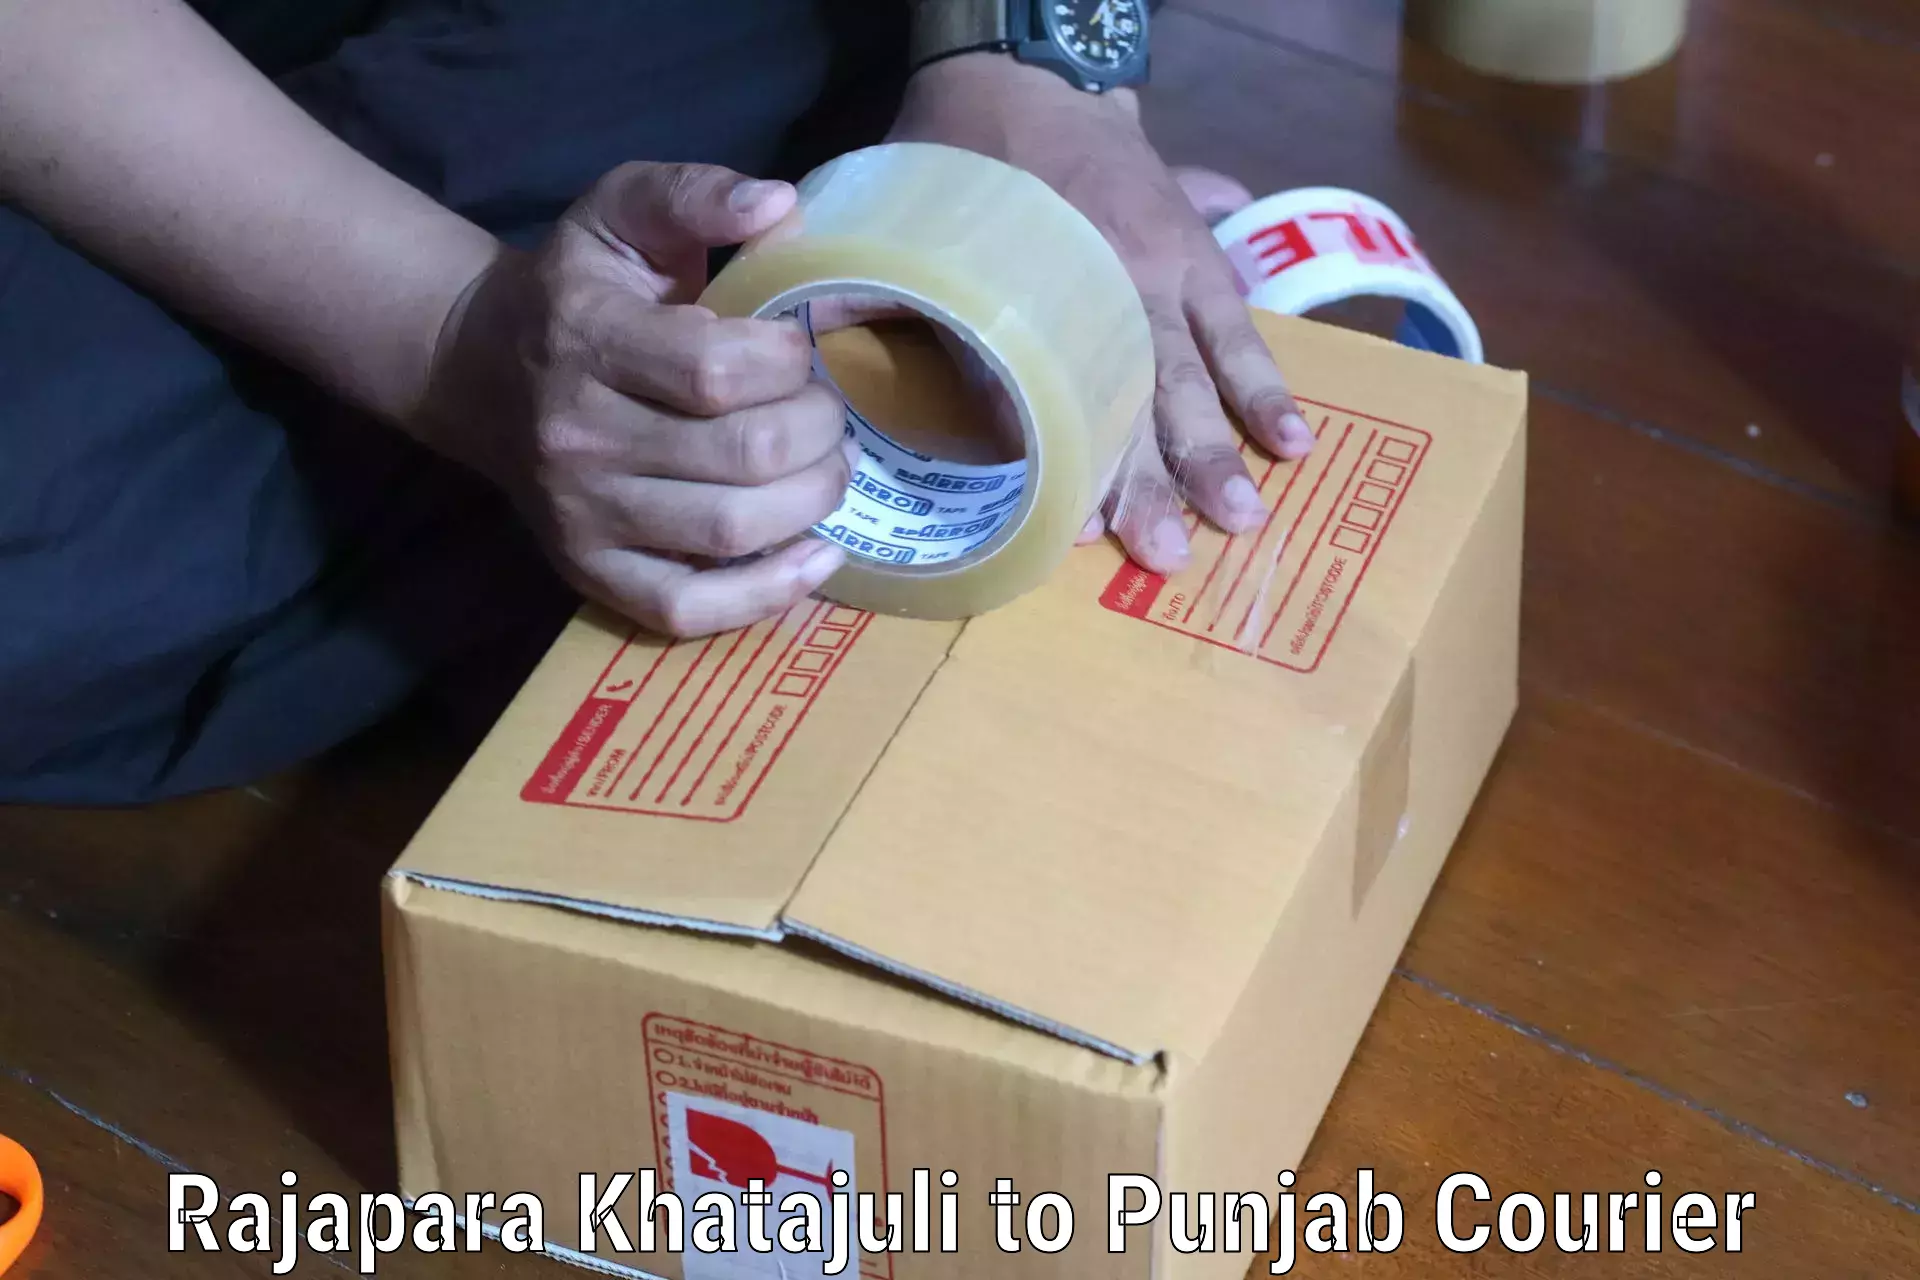 Reliable delivery network Rajapara Khatajuli to Rajpura